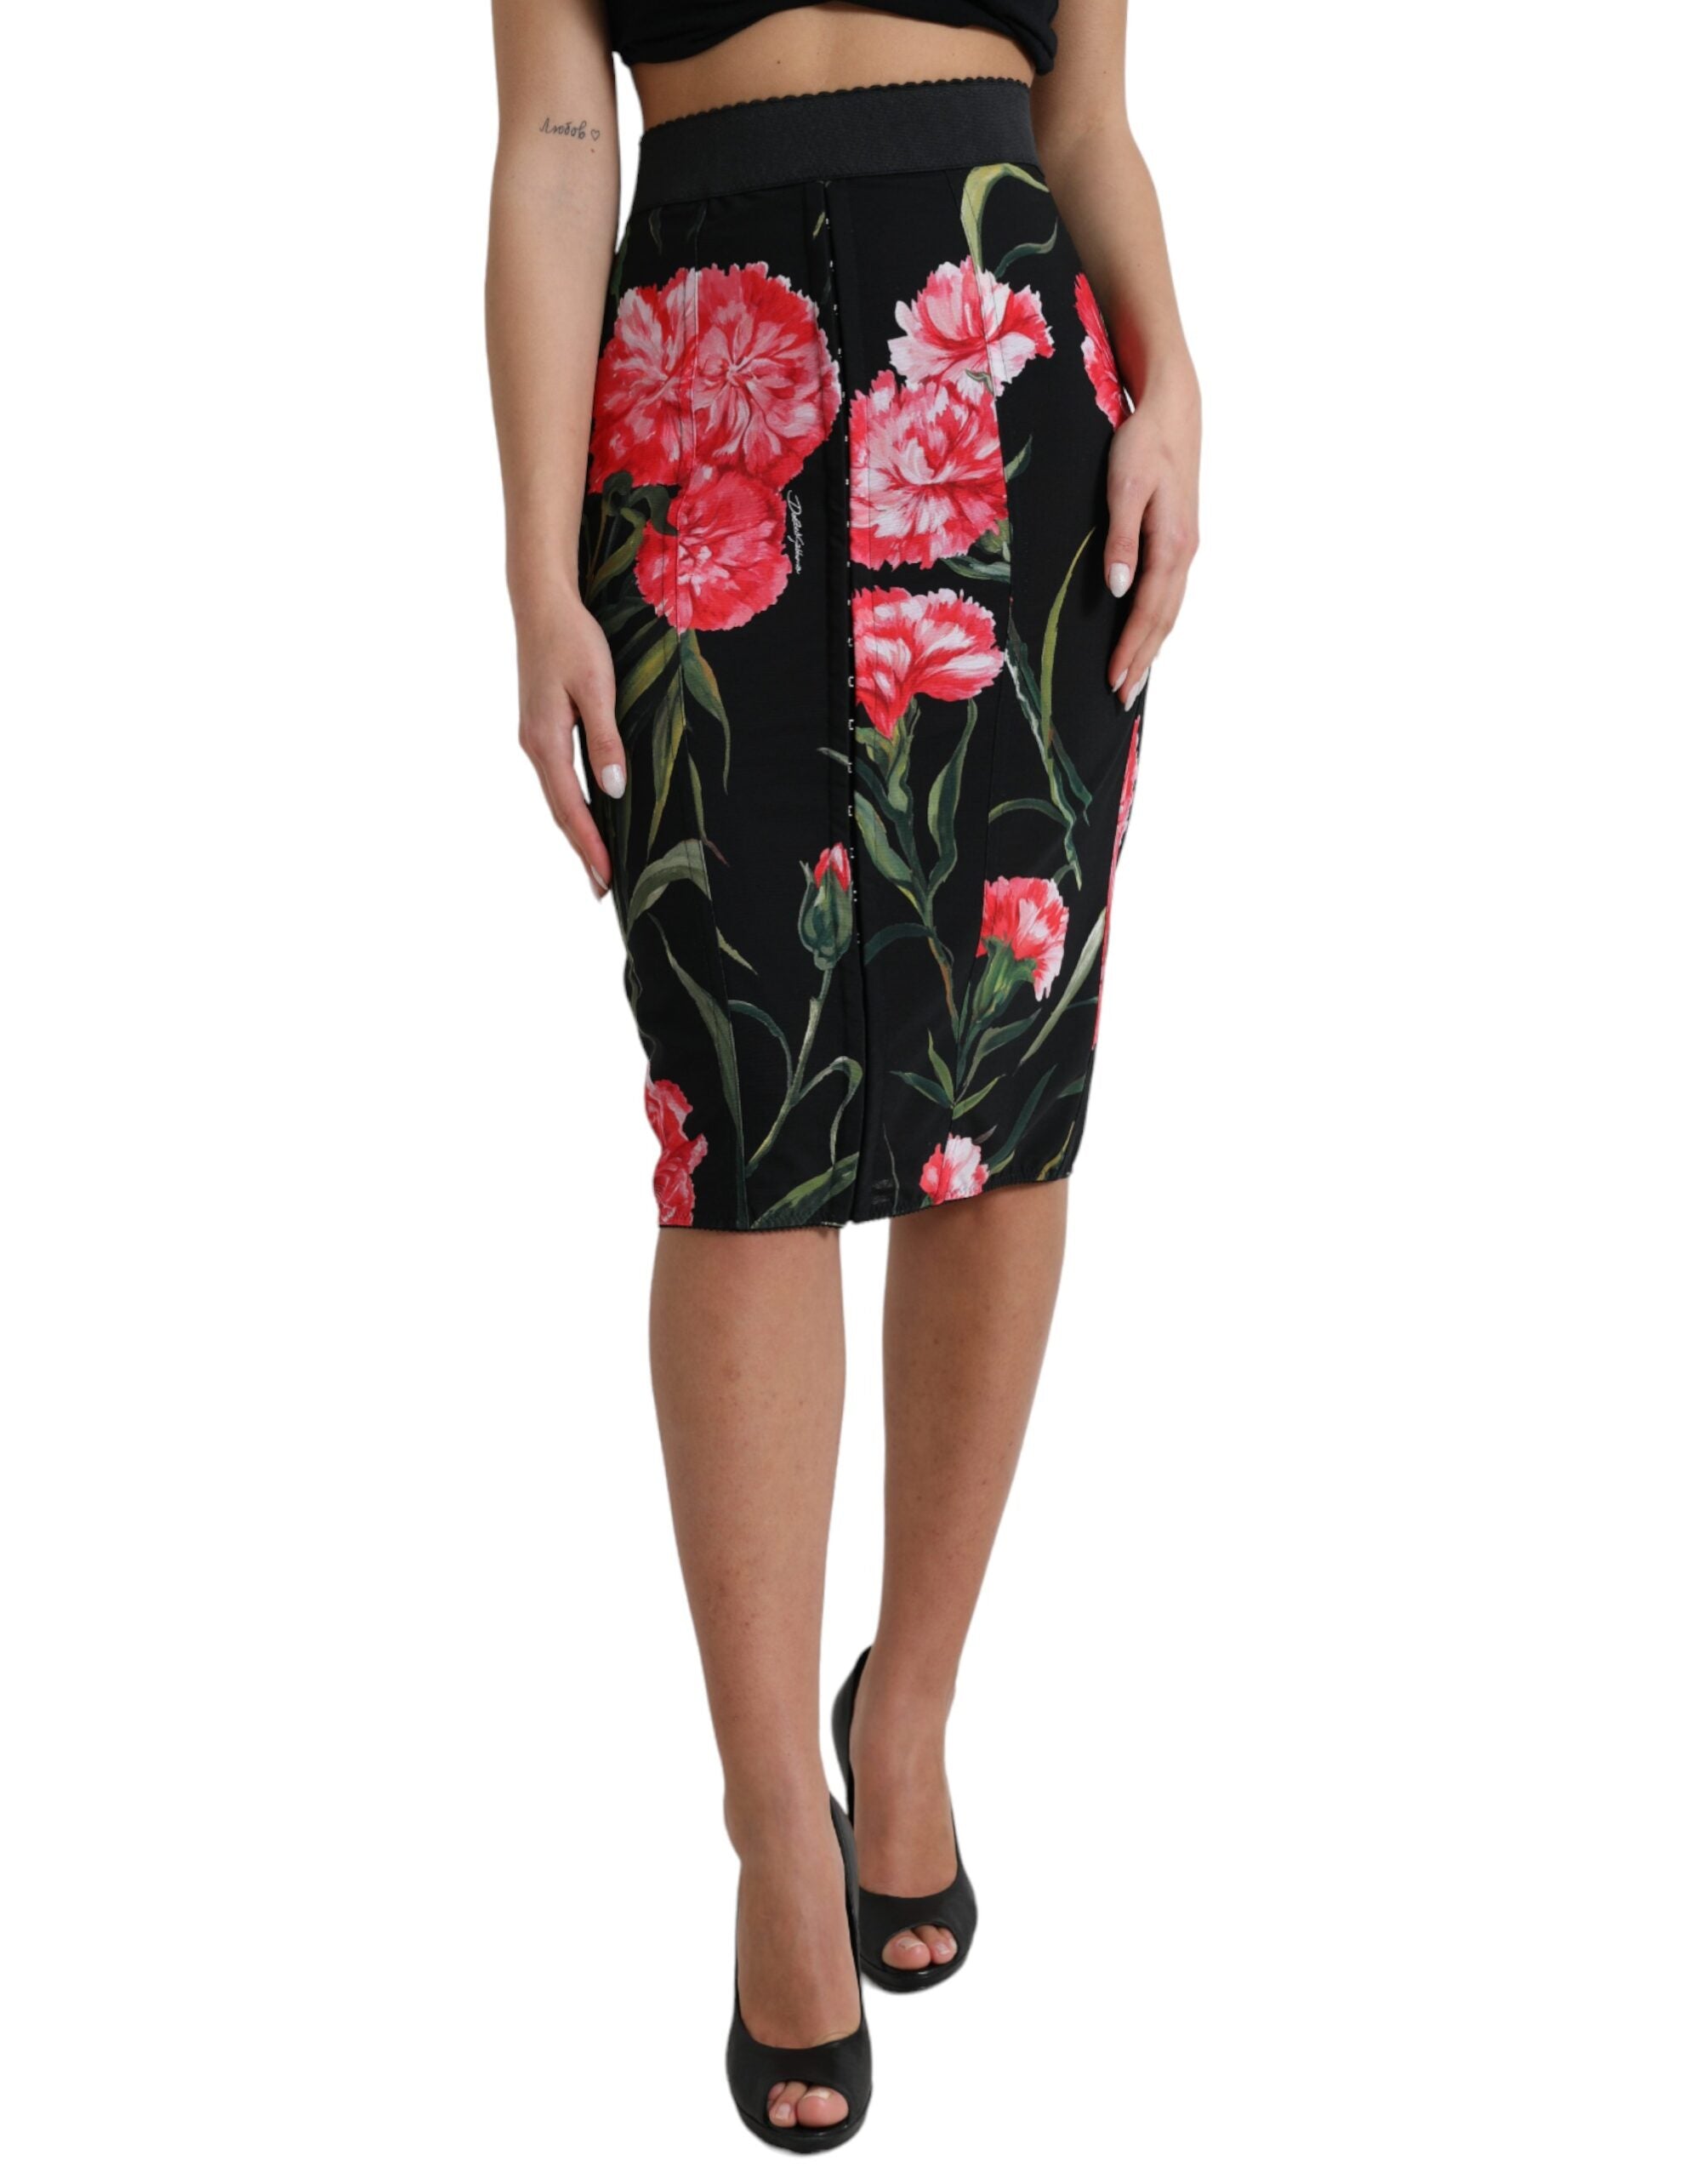 DOLCE & GABBANA Dolce & Gabbana  Carnation Pencil Cut Knee Length Women's Skirt